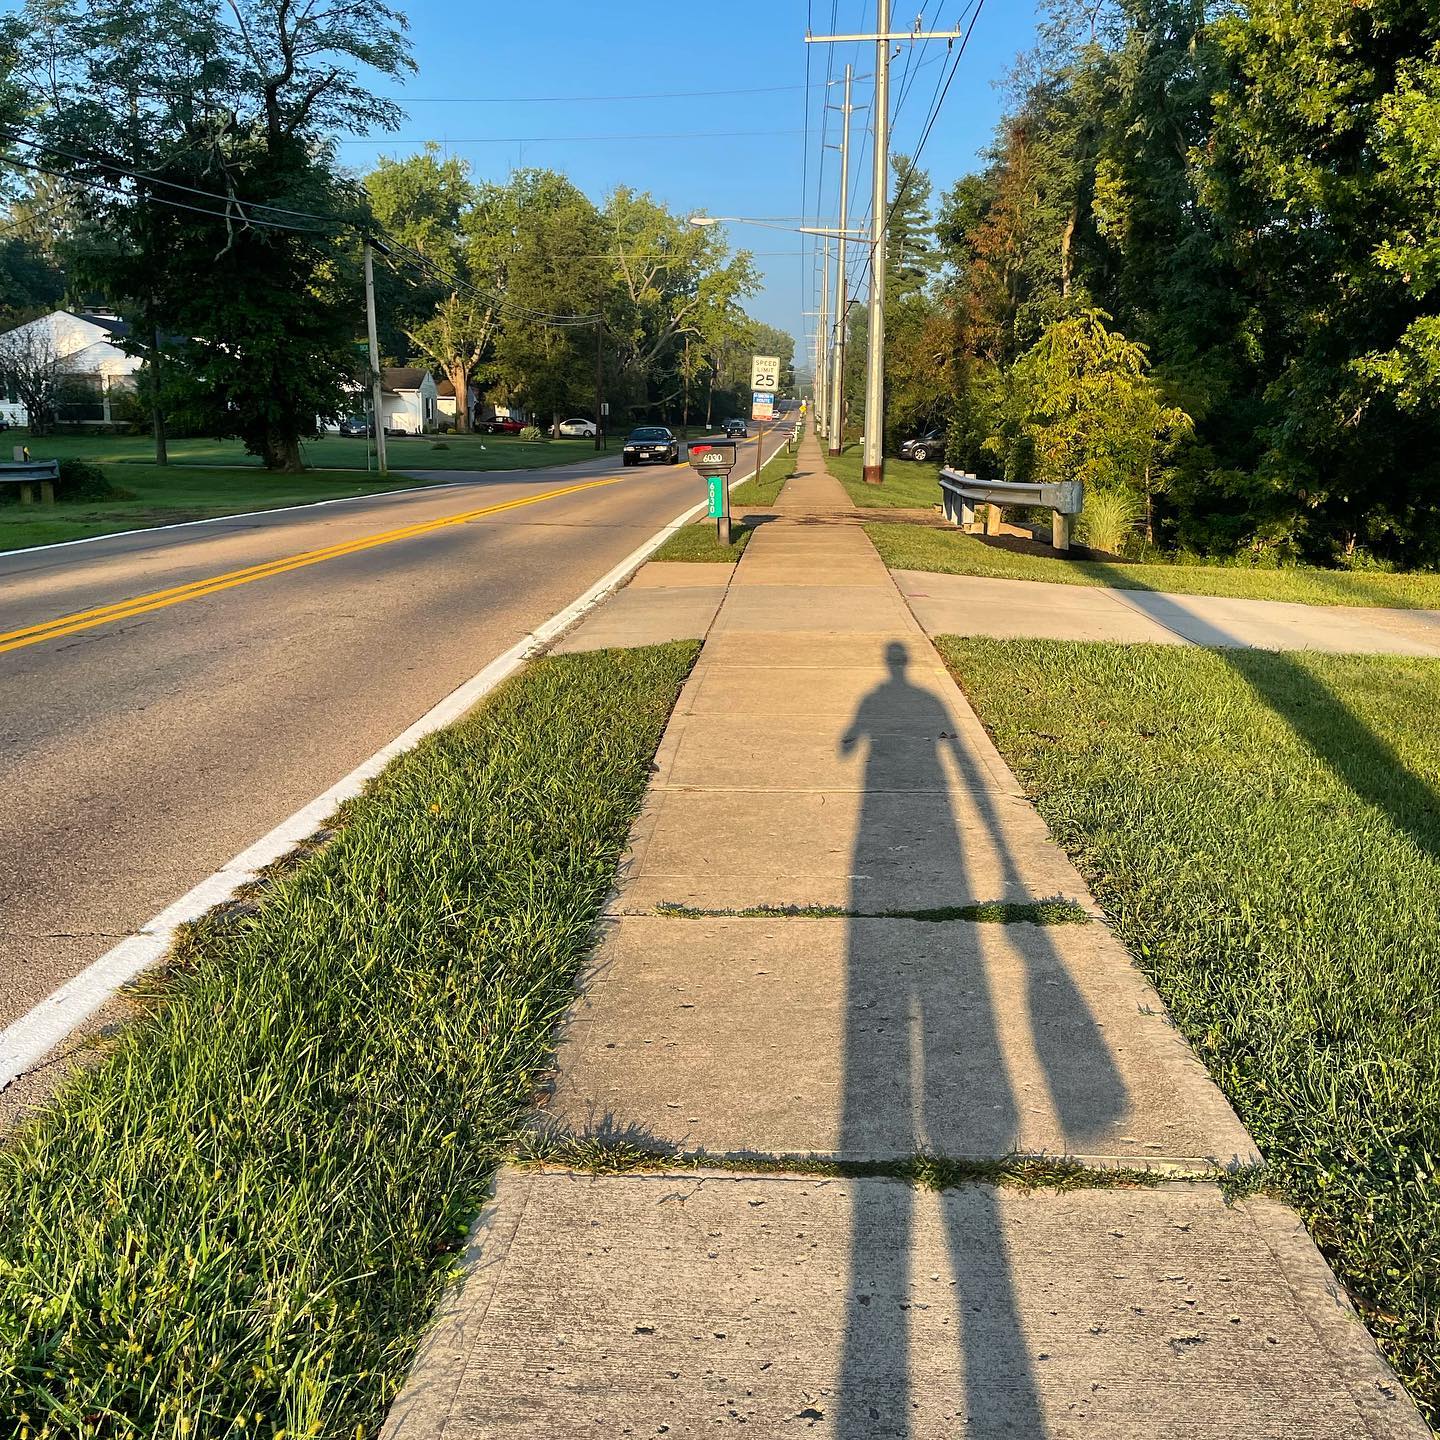 Morning. Tall shadow. Taller hopes.